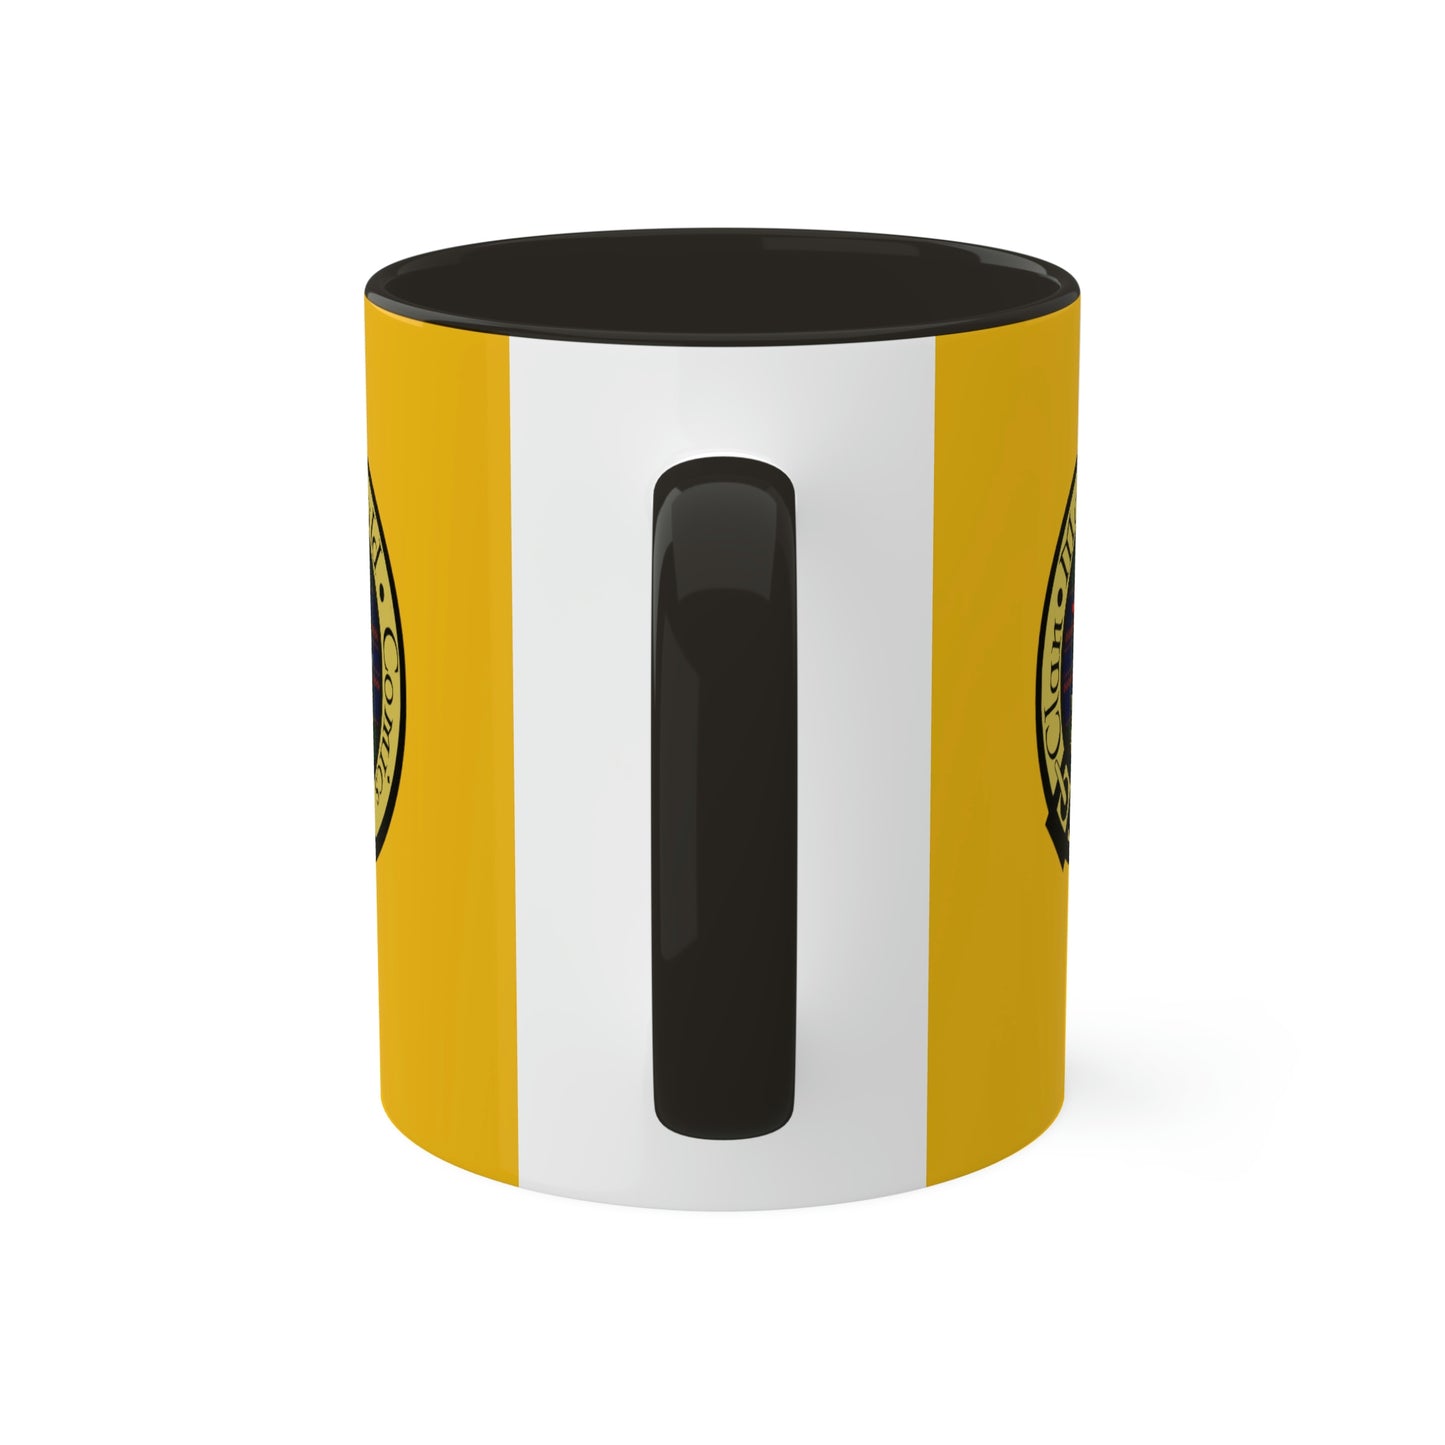 Clan McDonald Comics Coffee Mug - Yellow